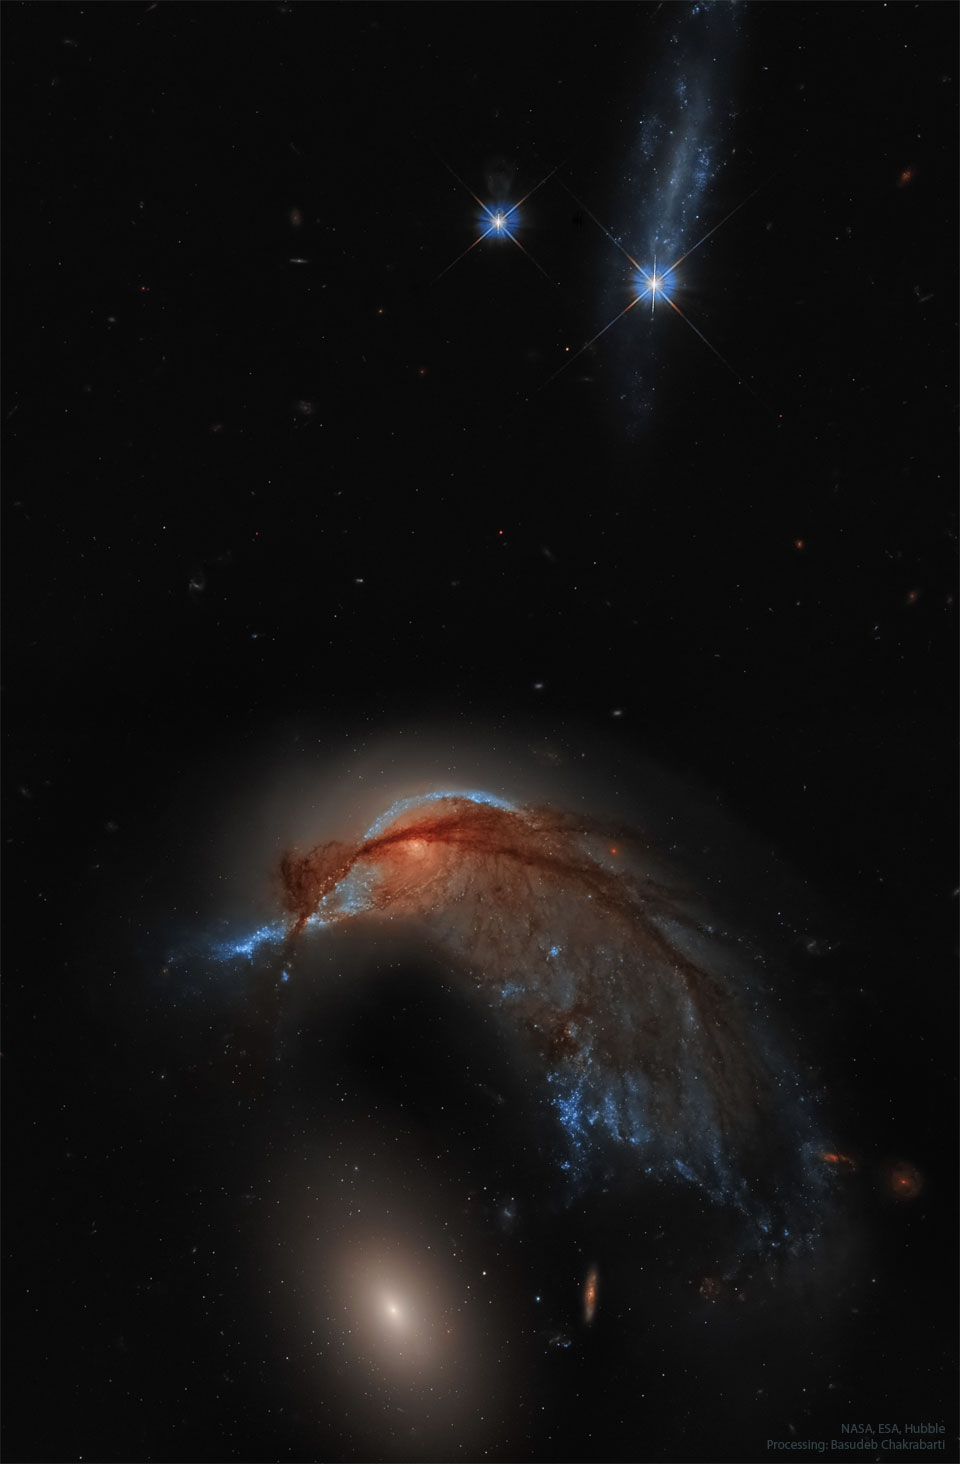 Arp 142: The Hummingbird Galaxy